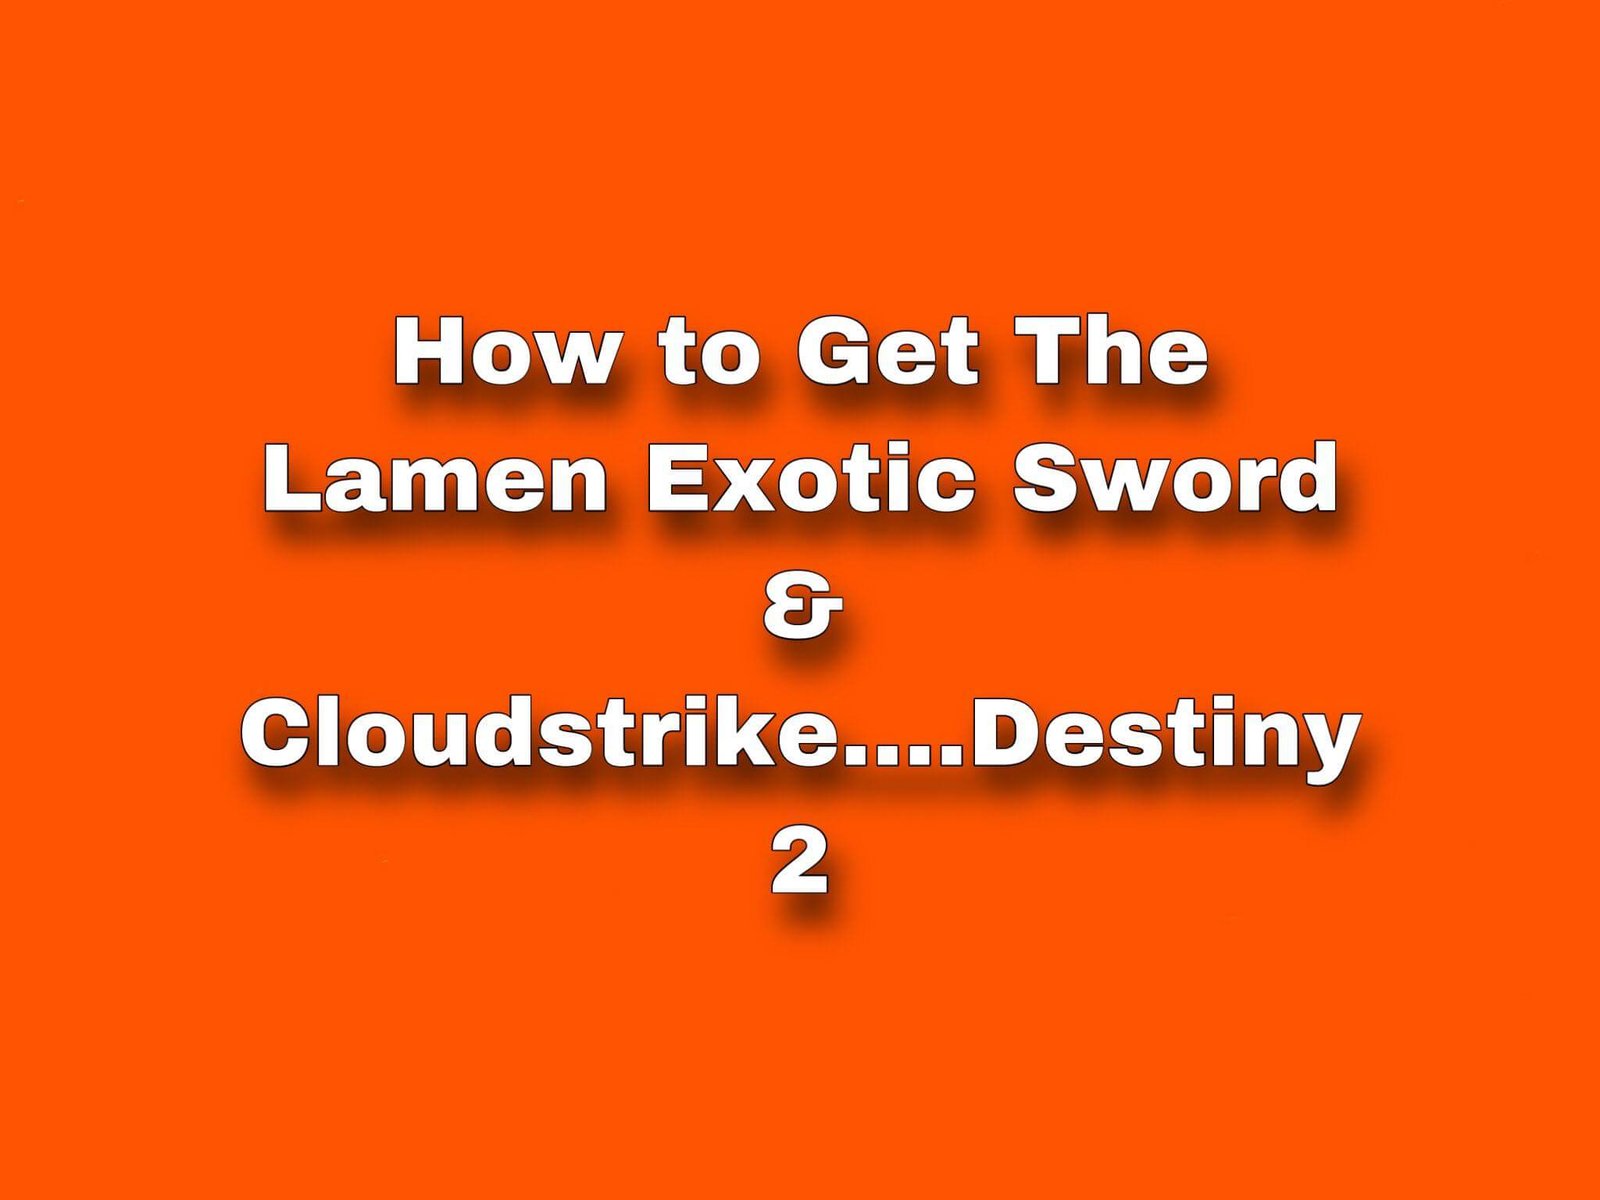 https://shyoz.com/wp-content/uploads/2021/02/How-to-Get-The-Lamen-Exotic-Sword-Cloudstrike..jpg